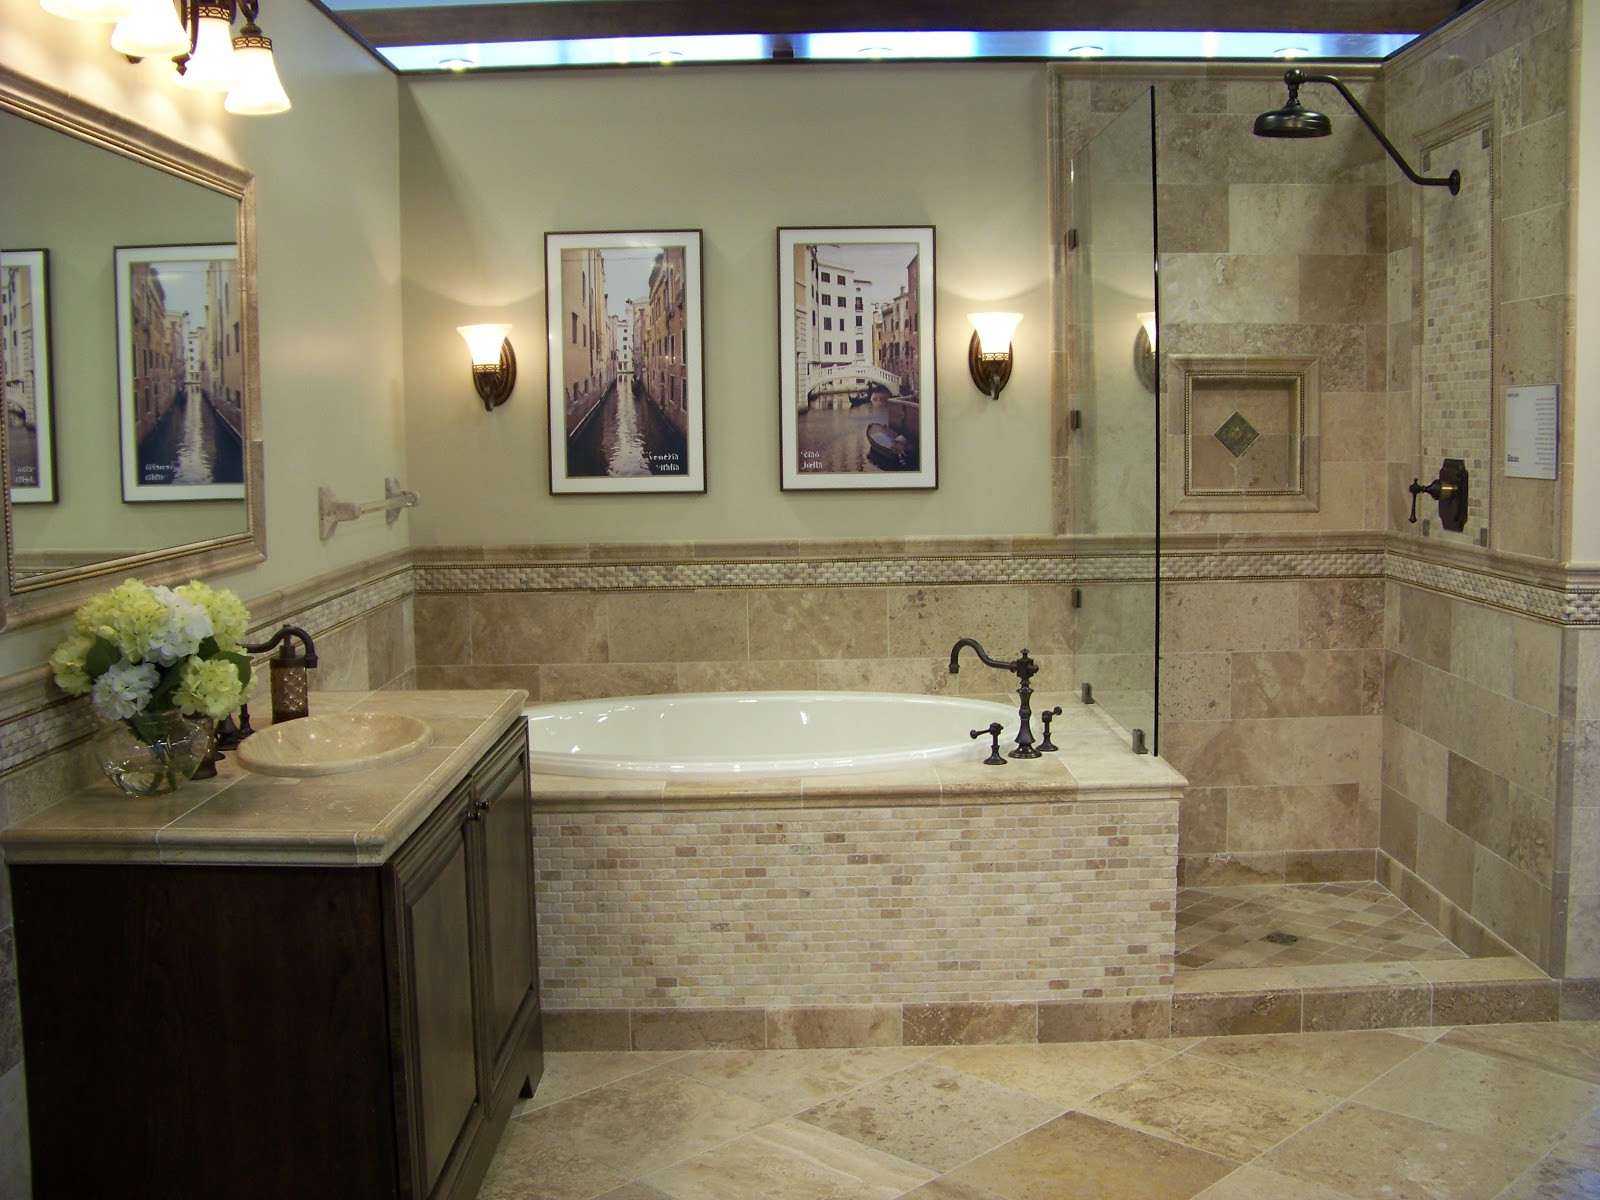 Bathroom Floor Designs
 Home Decor Bud ista Bathroom Inspiration The Tile Shop